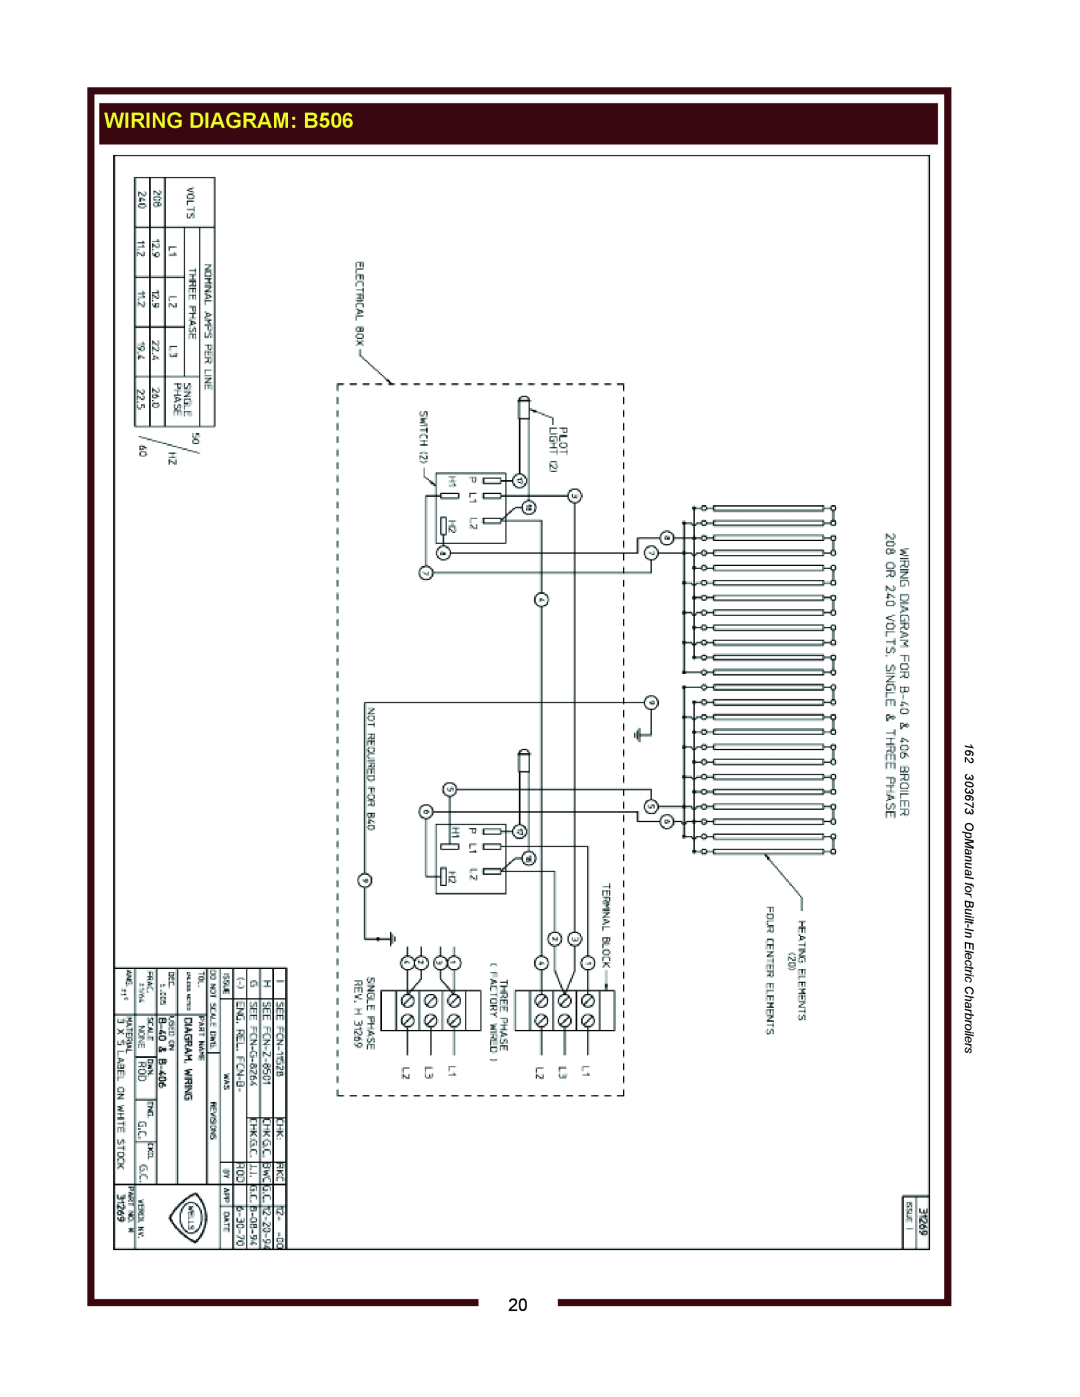 Wells B406, B446 operation manual WIRING DIAGRAM B506 